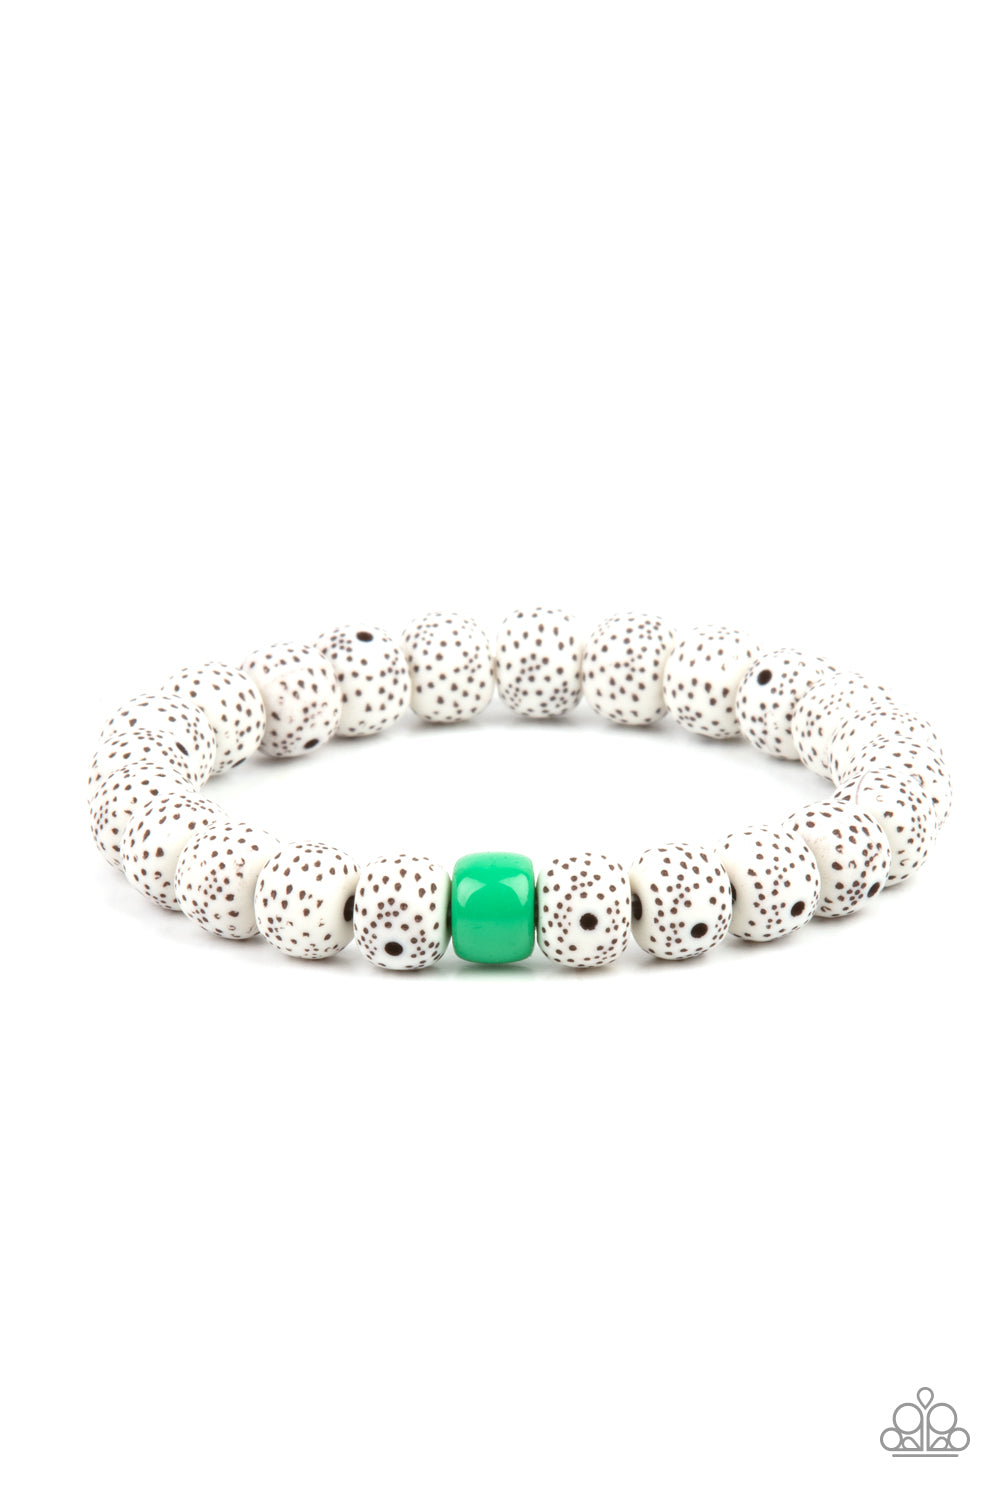 five-dollar-jewelry-zen-second-rule-green-bracelet-paparazzi-accessories